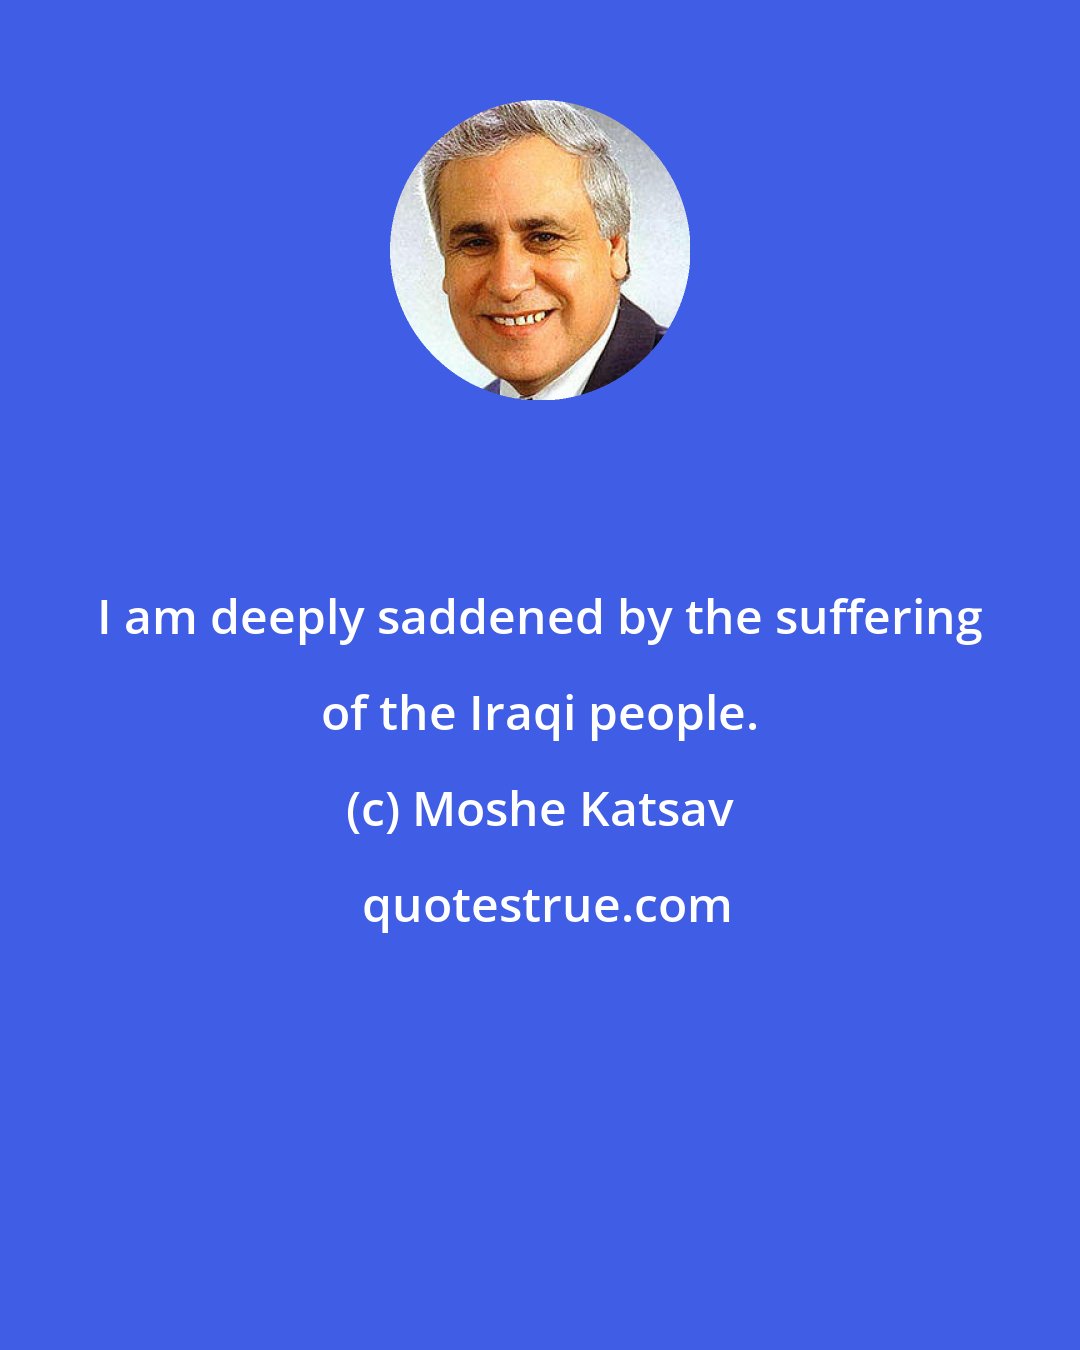 Moshe Katsav: I am deeply saddened by the suffering of the Iraqi people.